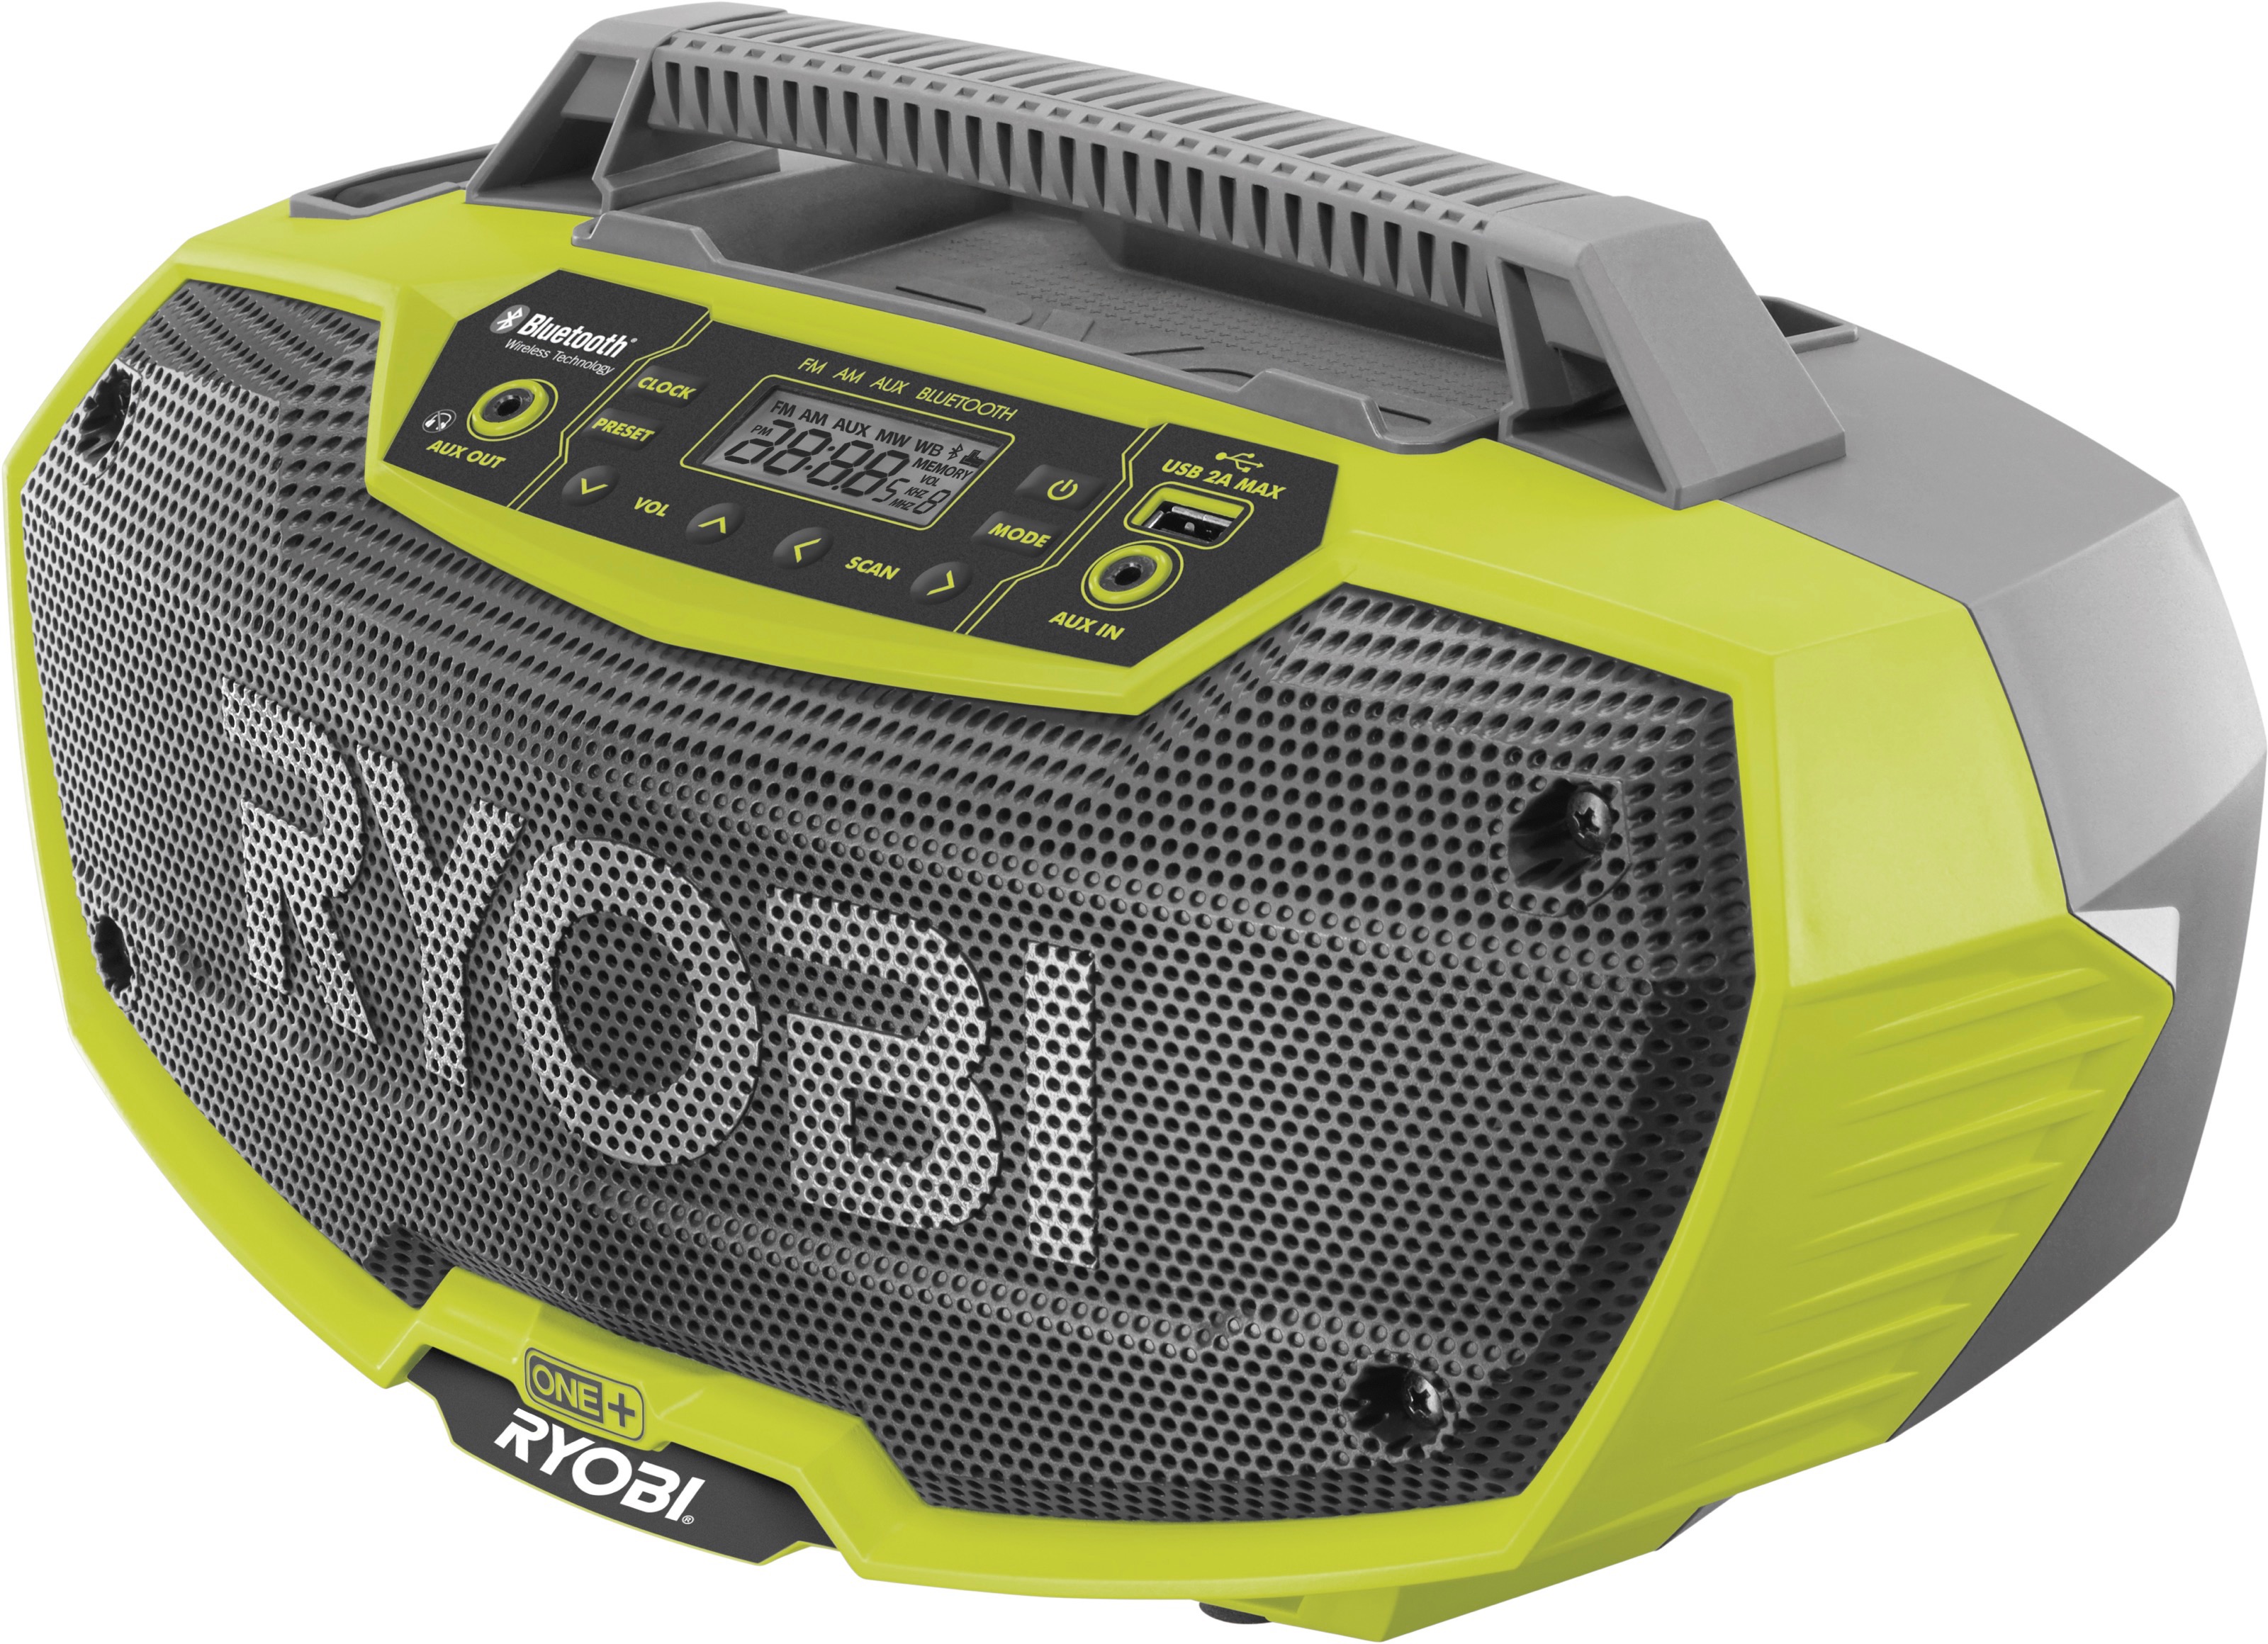 Ryobi R18RH-0 radio